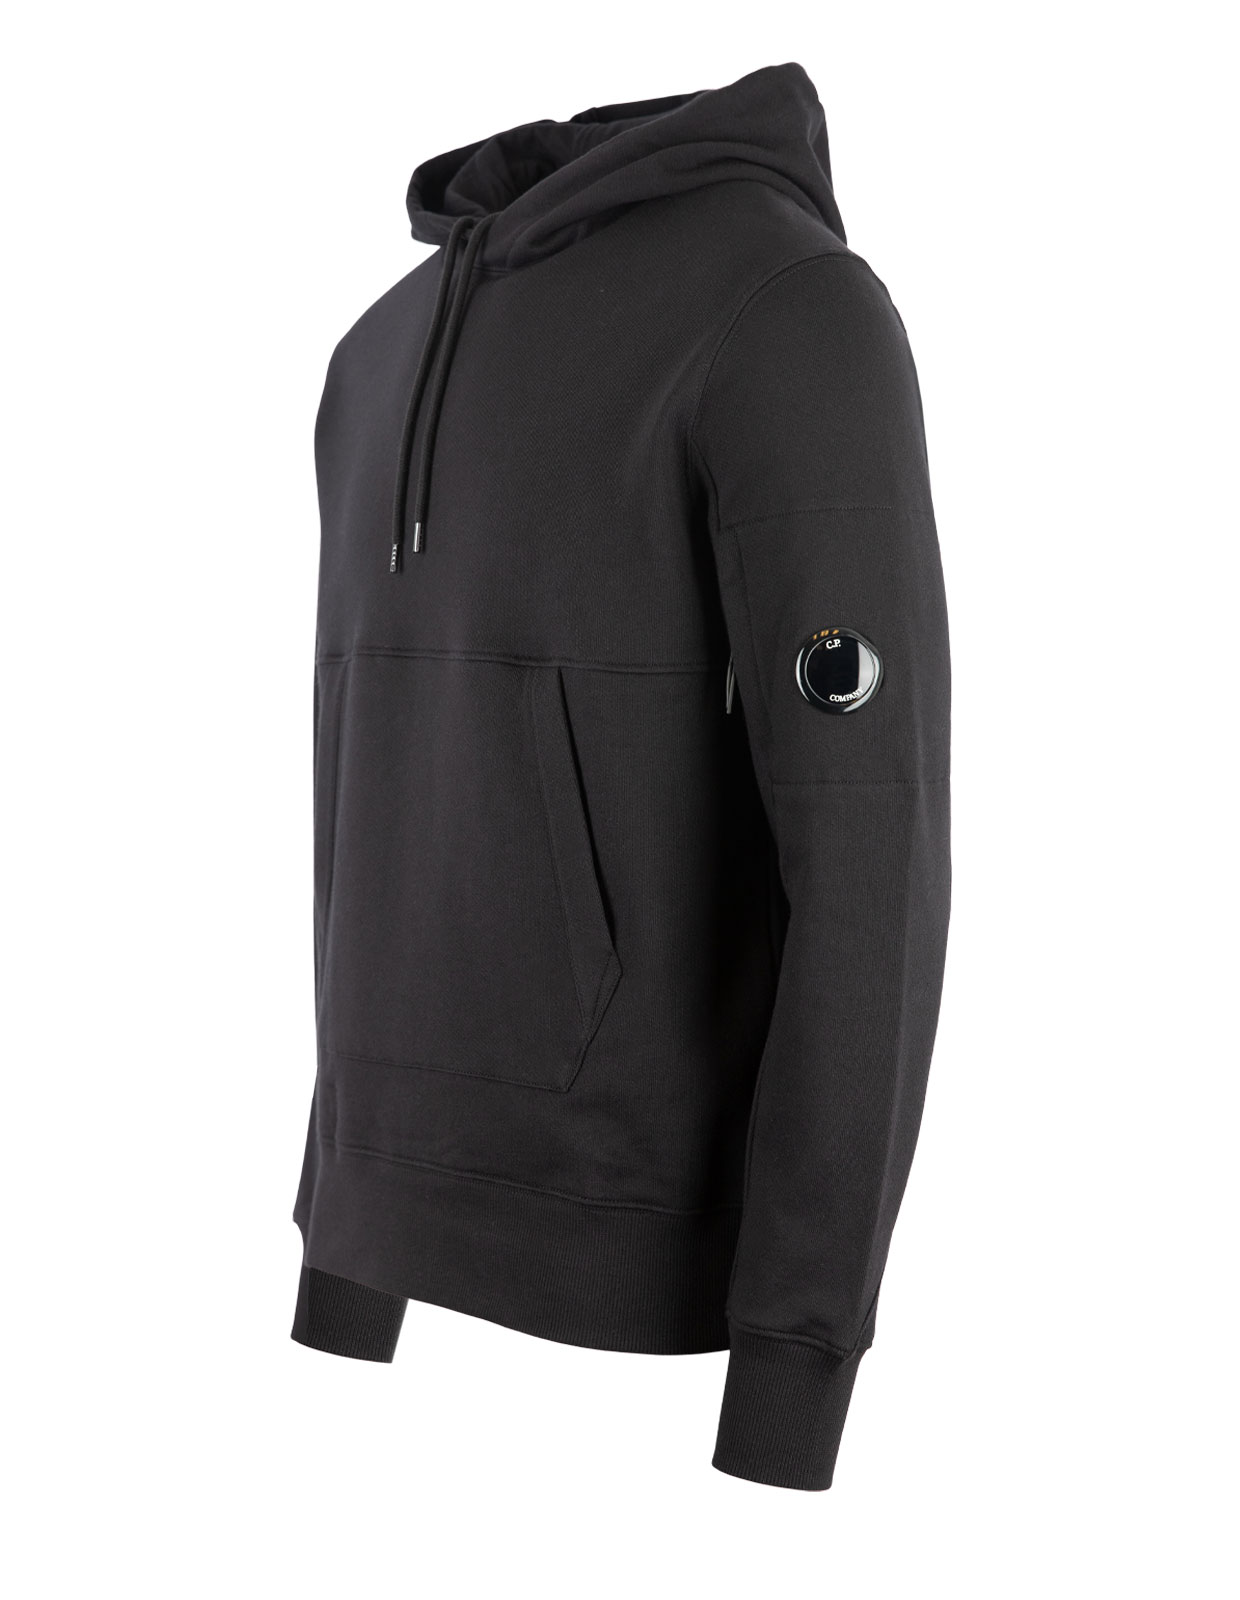 Hooded Sweatshirt Black Stl XL